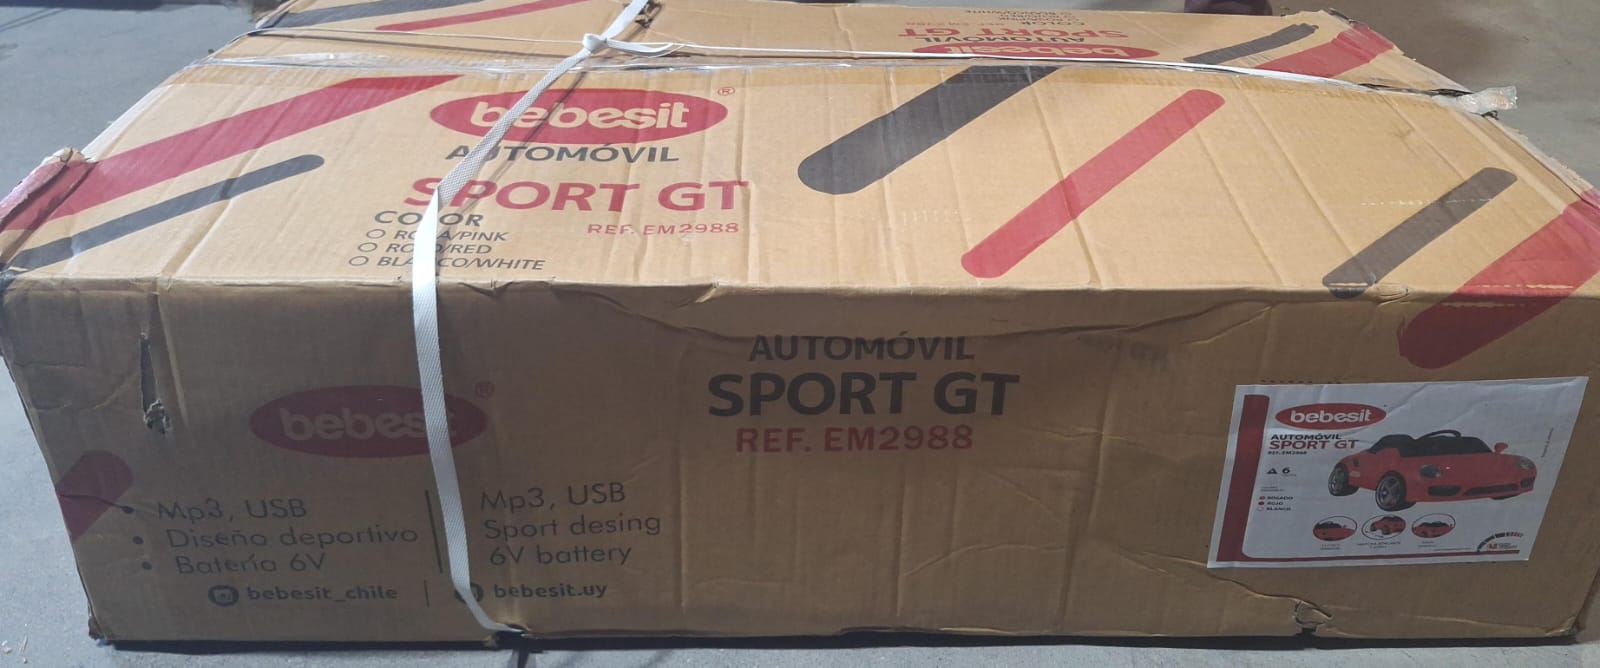 Automovil Sport Gt Bebesit Em2988R Rojo [Openbox]